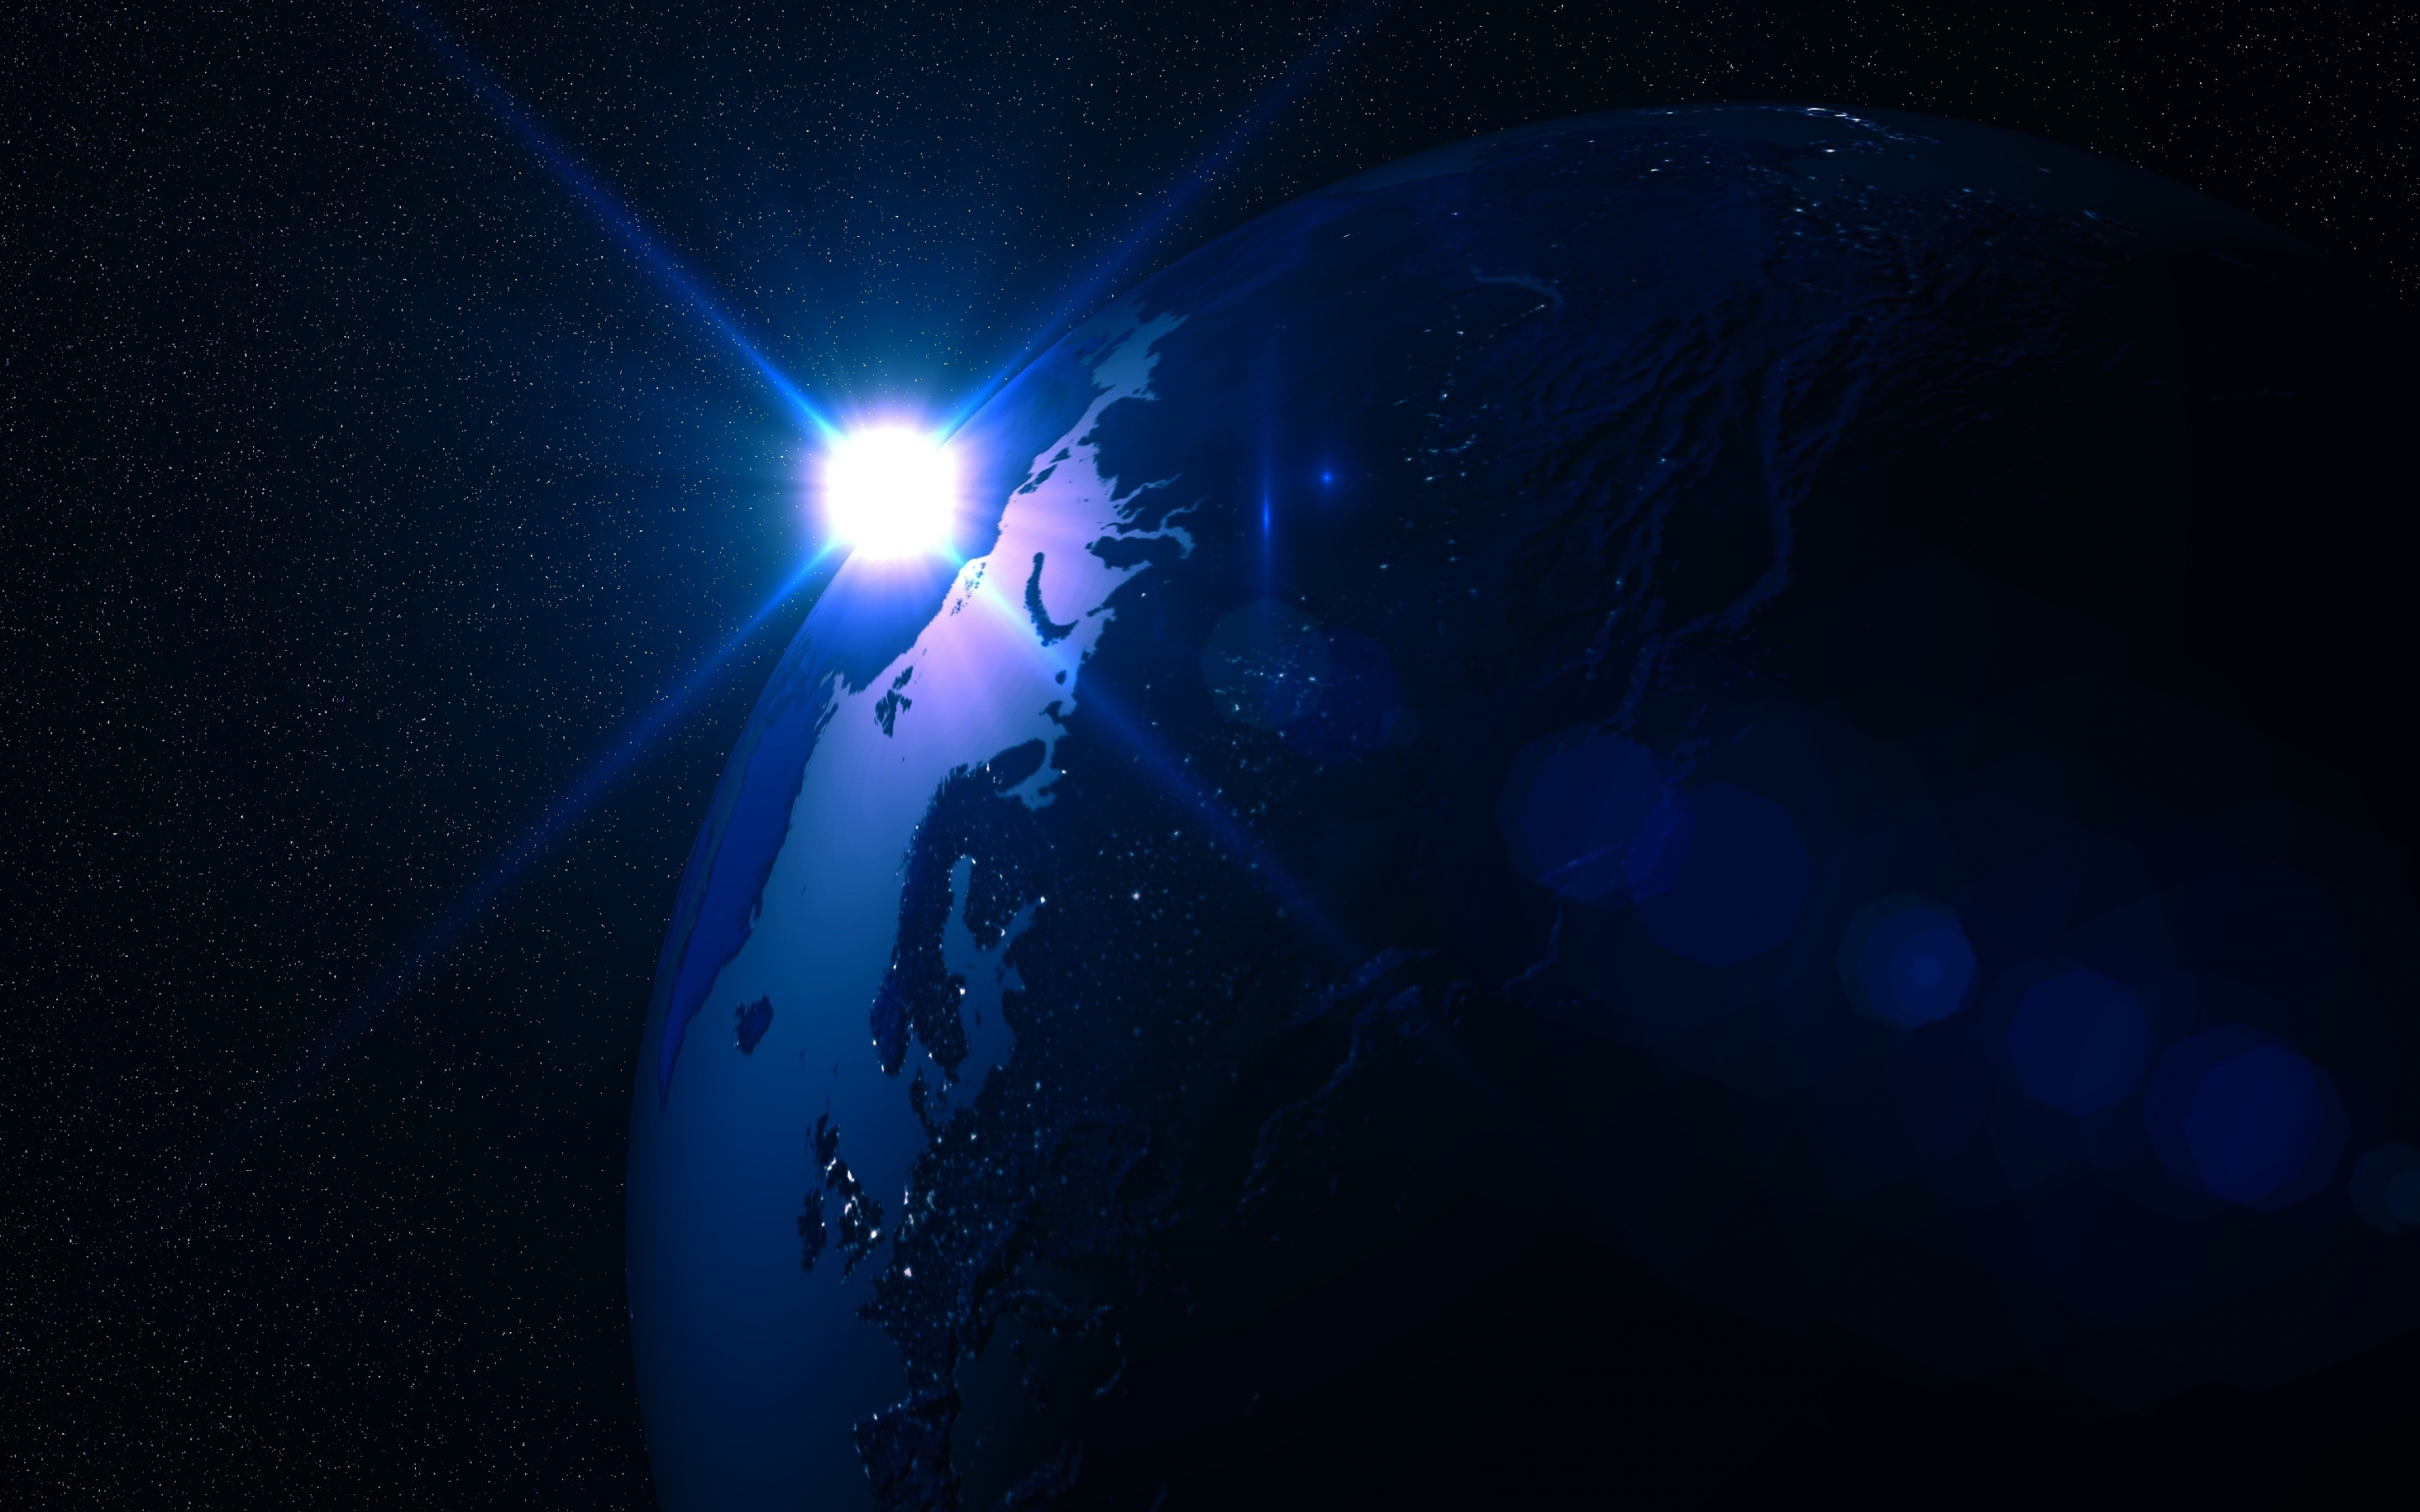 Download 2880x1800 Wallpaper Planet Star Shine Dark Space Mac Pro Retaia Image Background 15419